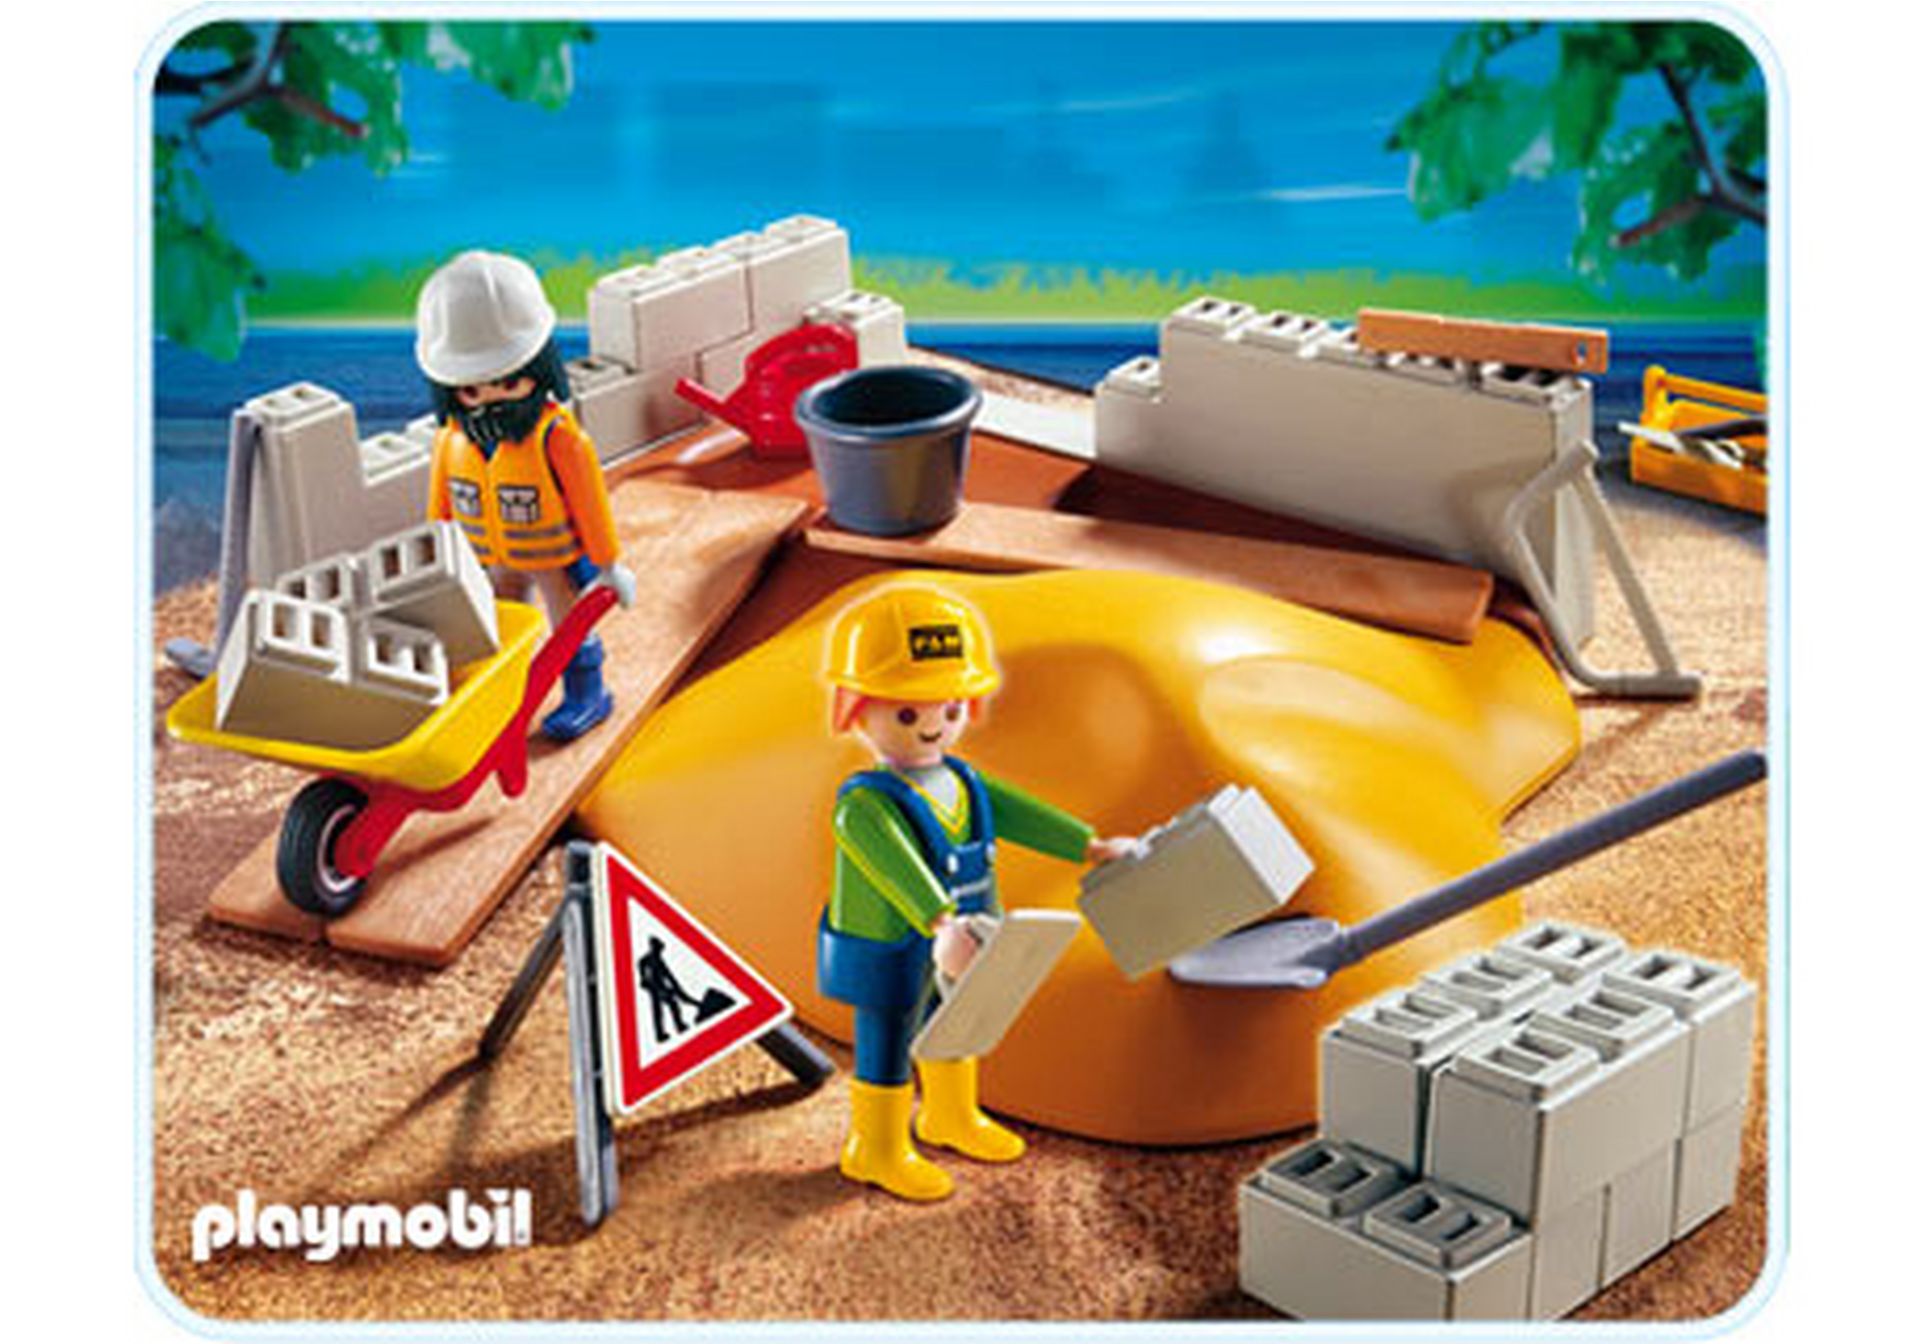 Playmobil City Life 4138 KompaktSet Baustelle NEU OVP 